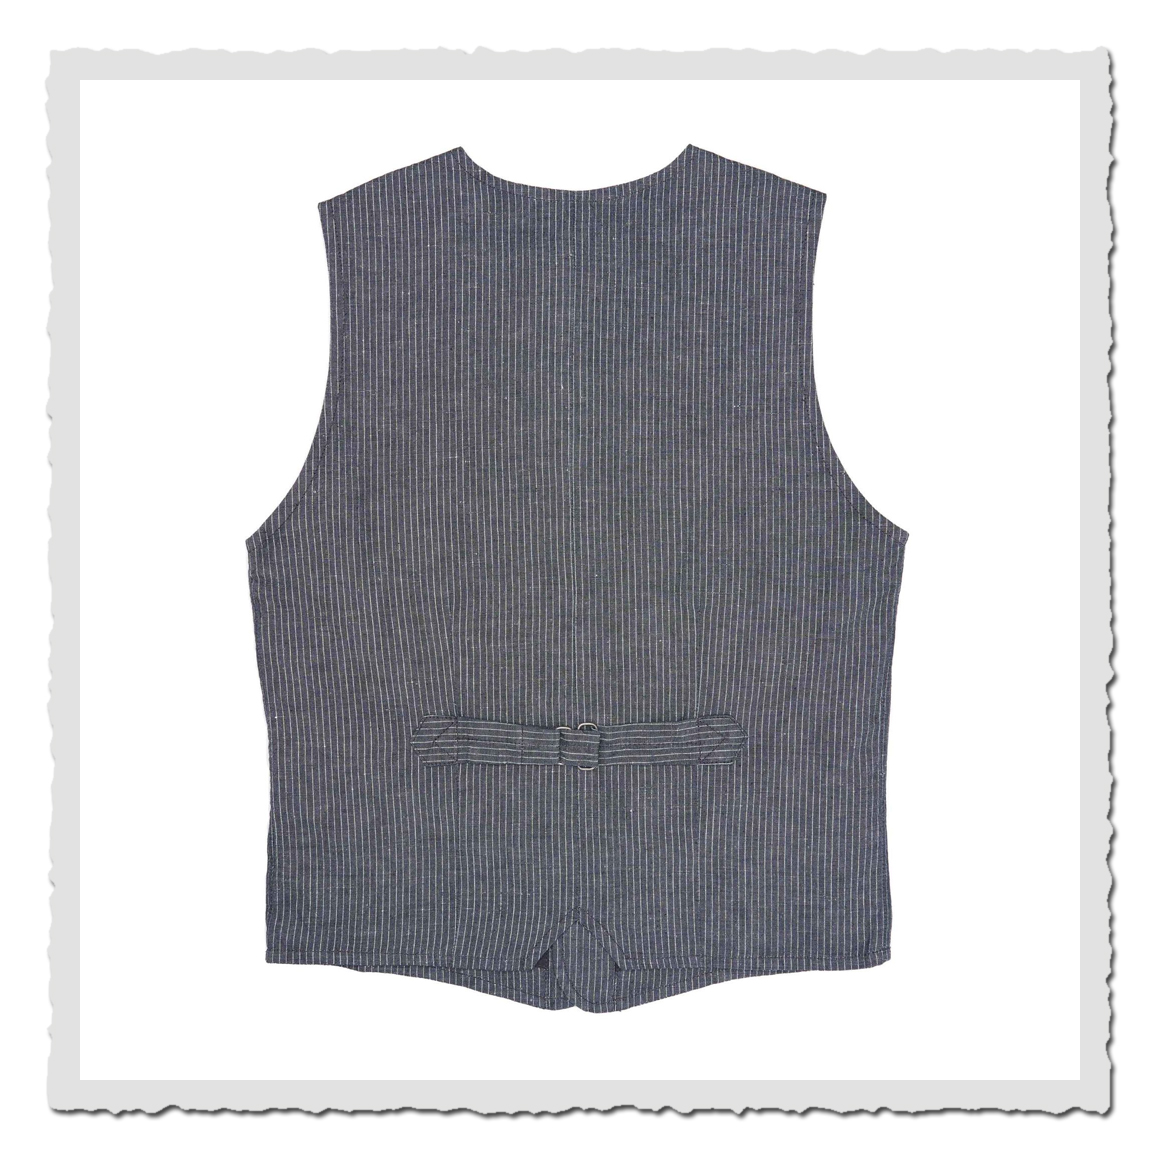 1905 Hauler Vest grey striped linen